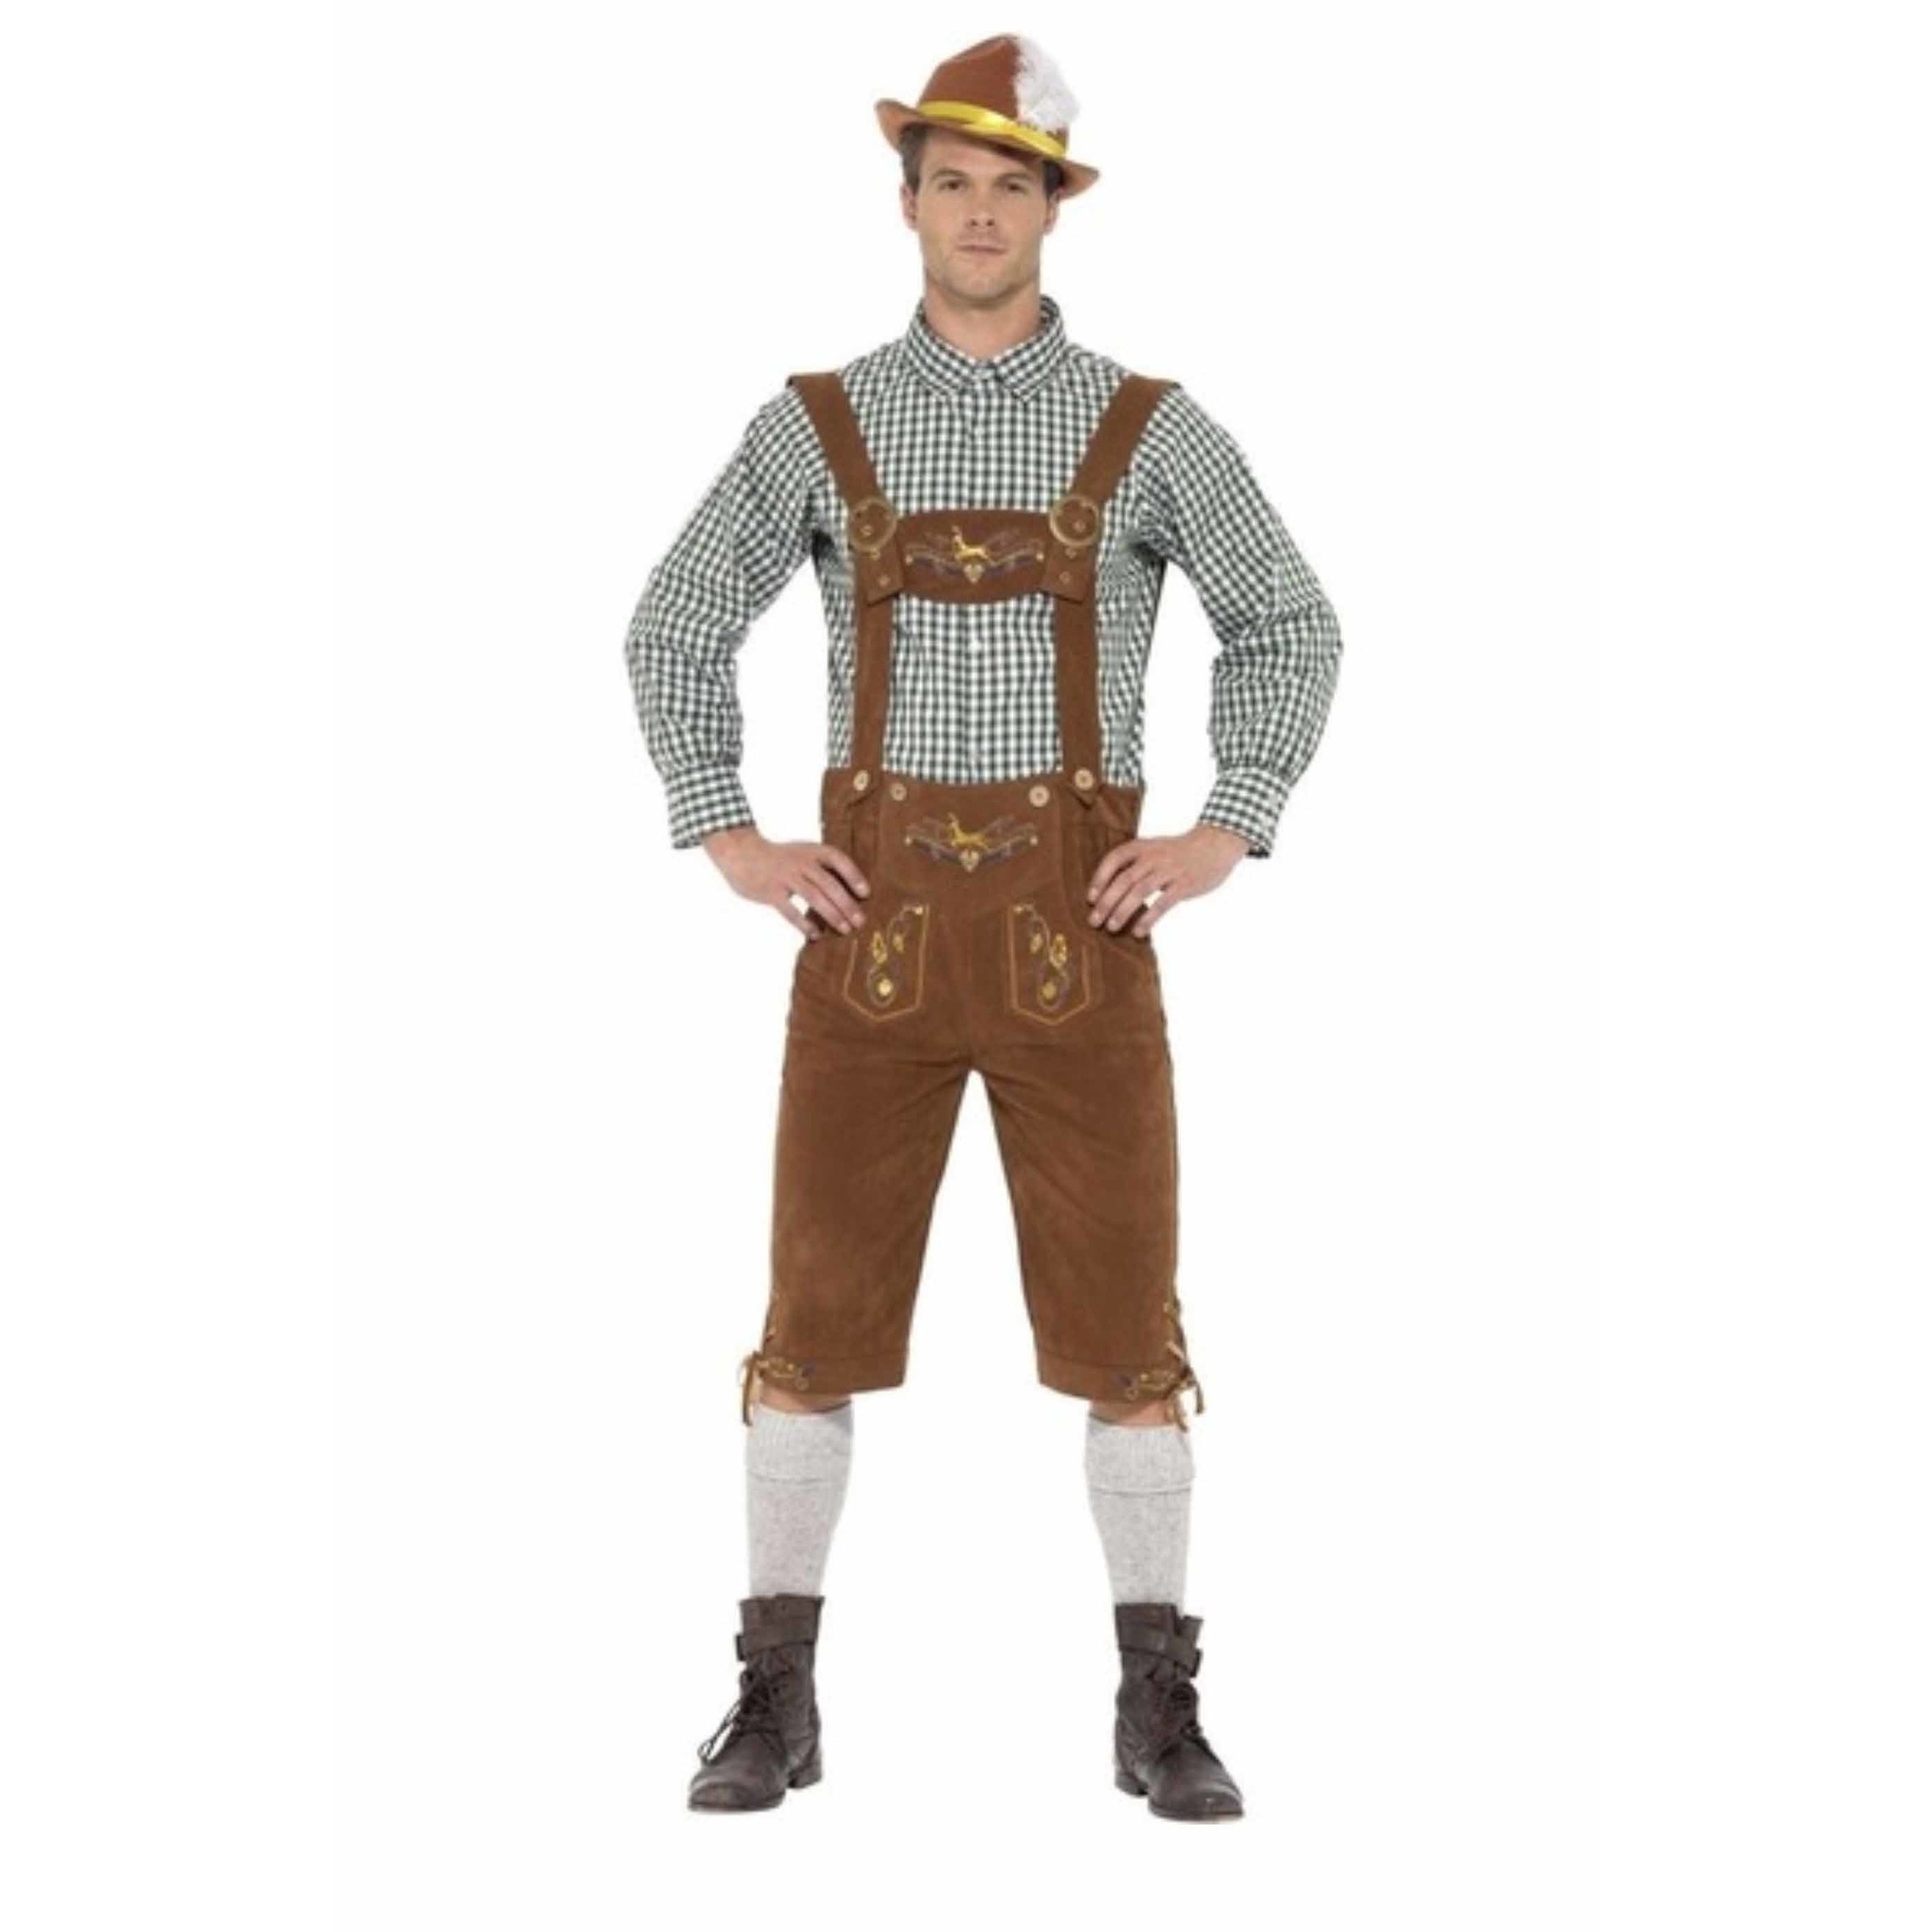 Oktoberfest - Bruine/groene Tiroler lederhosen kostuum met blouse voor heren